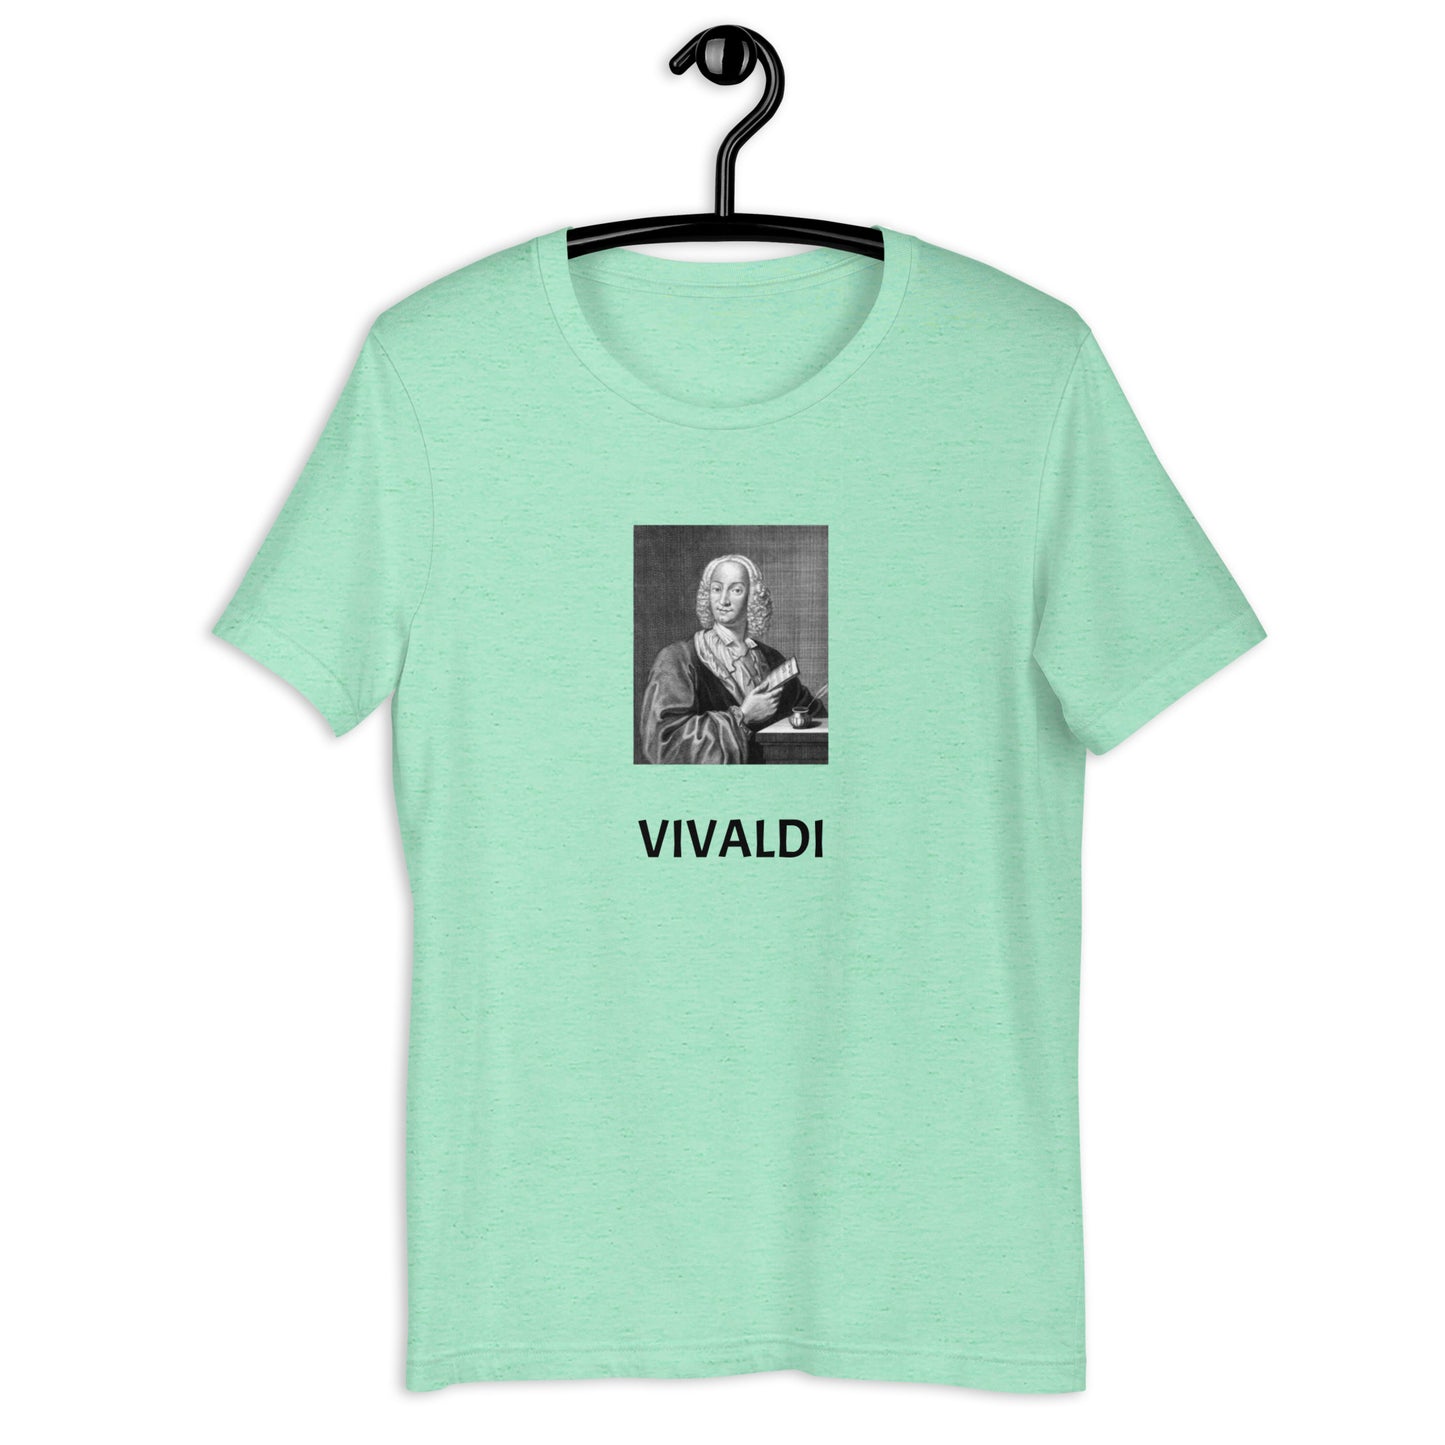 Vivaldi unisex t-shirt